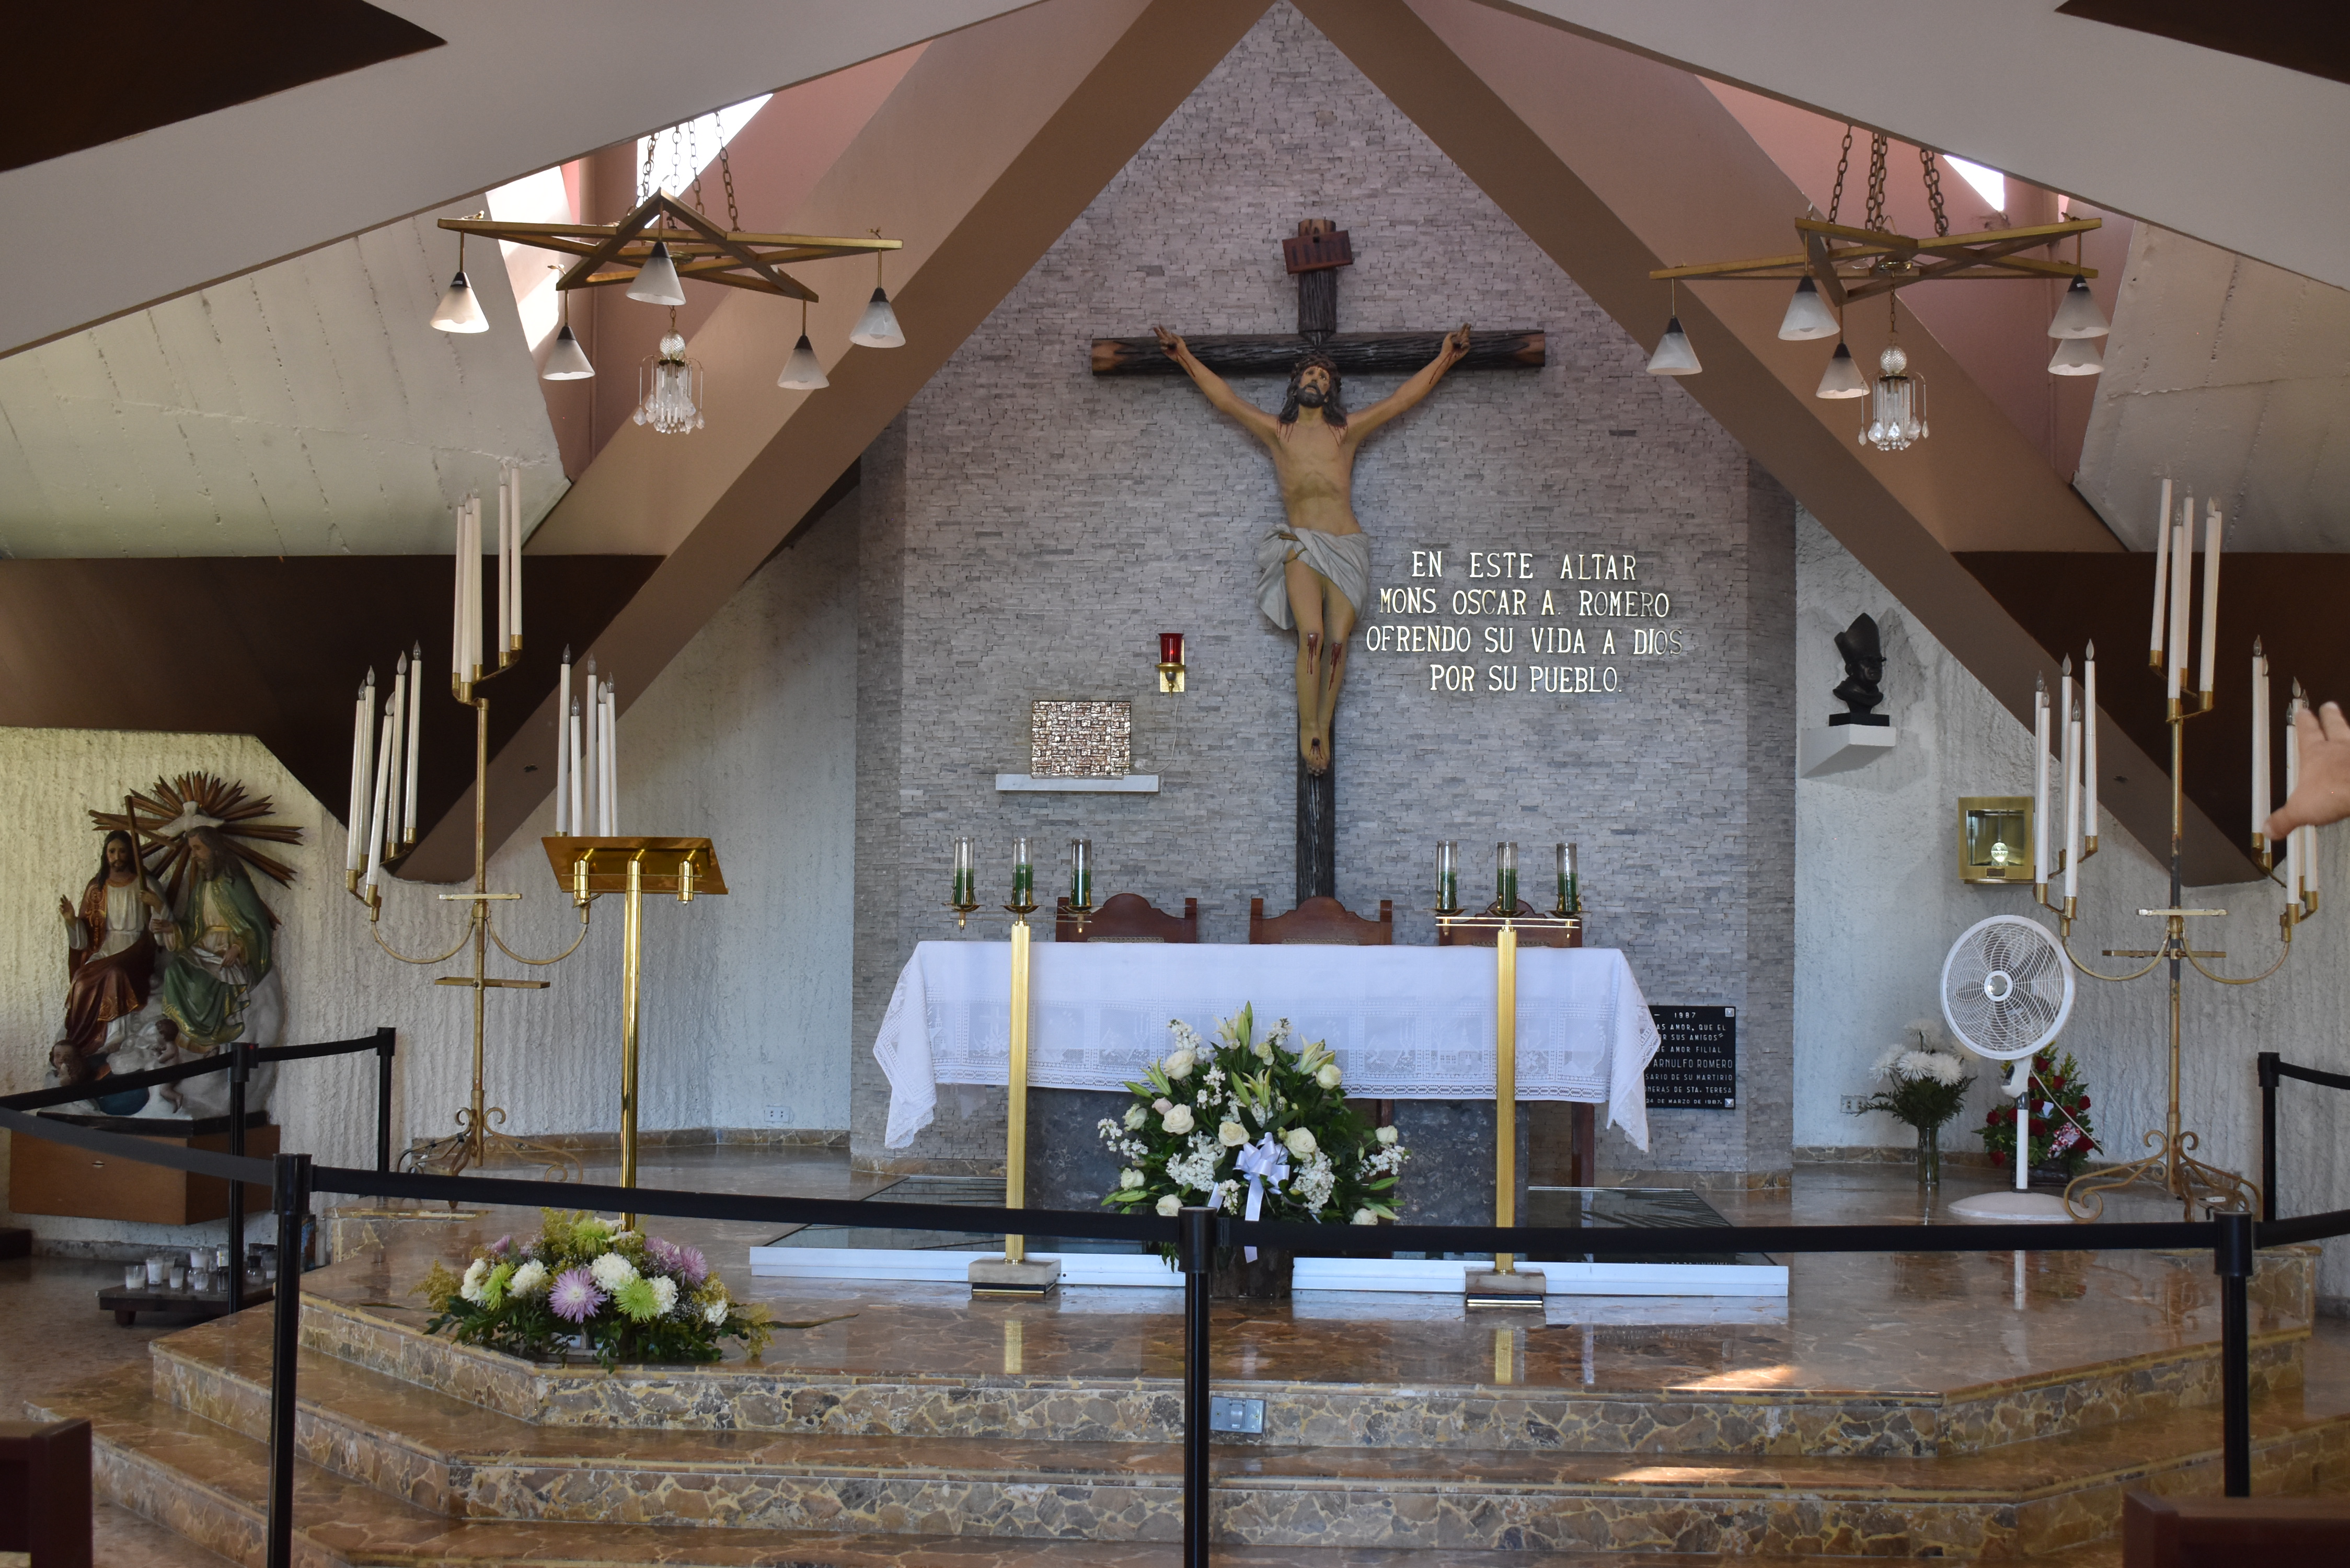 archbishop Romero assassination chapel